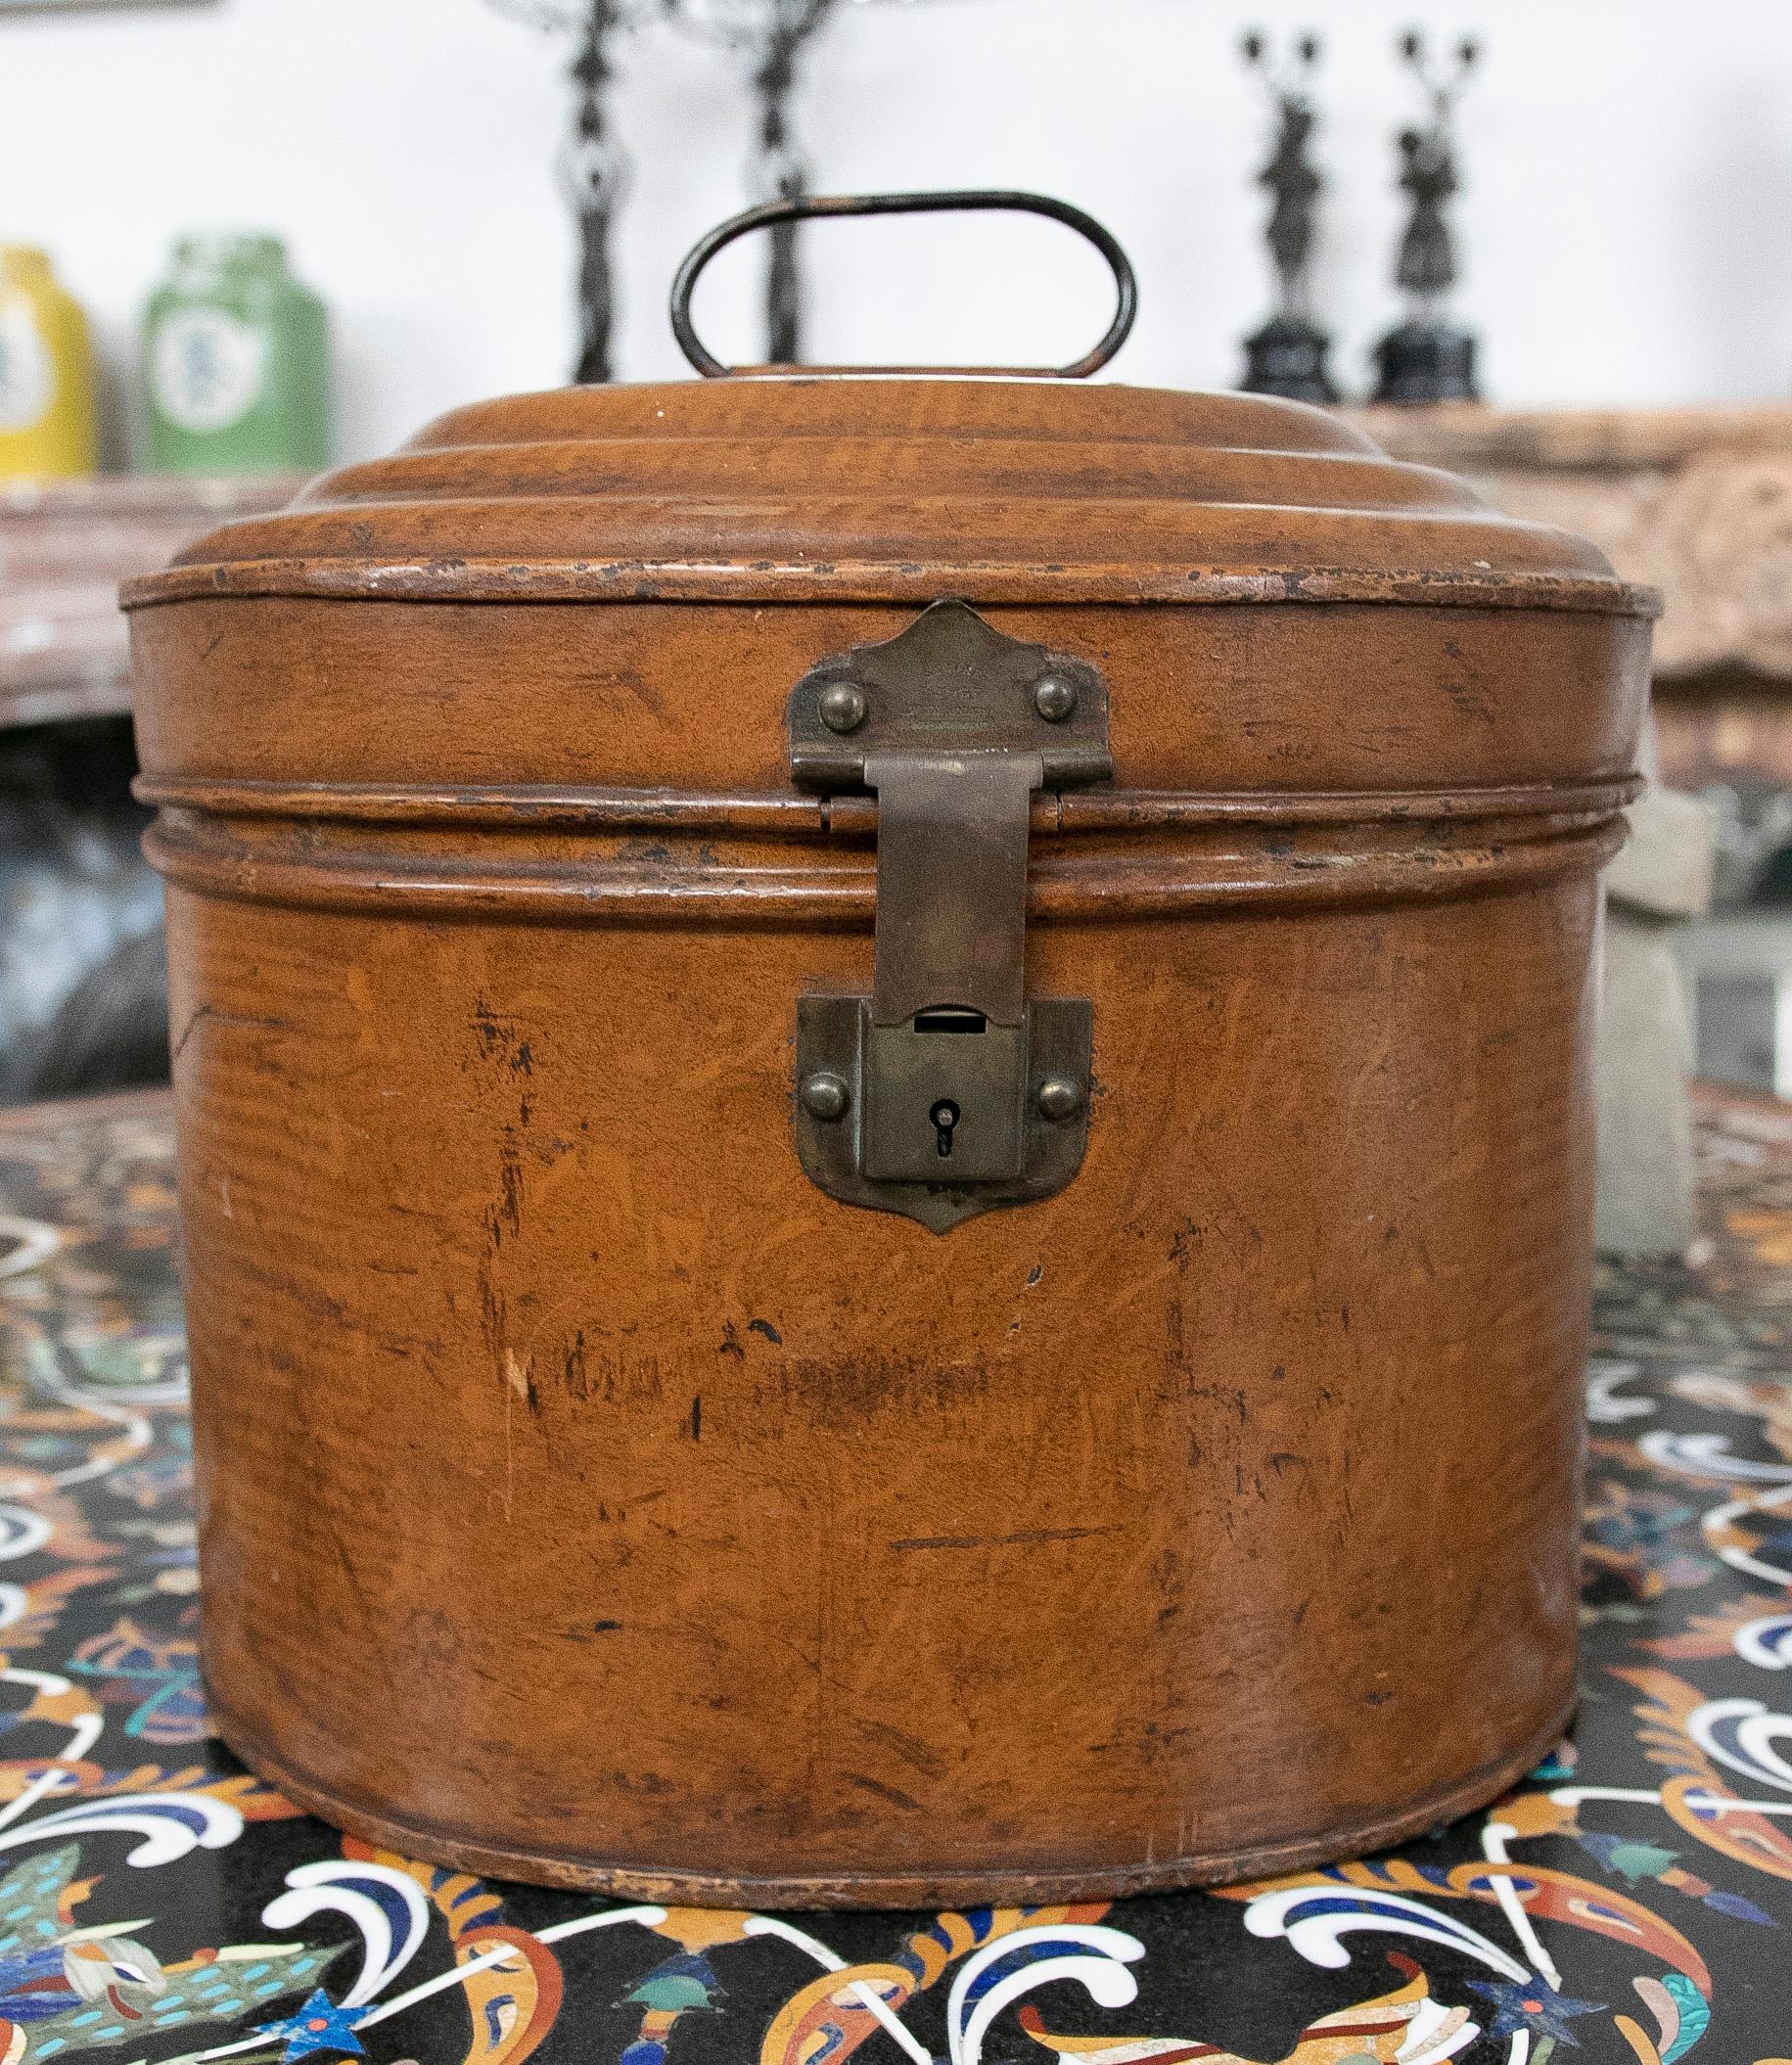 Decorative metal box in brown tone.